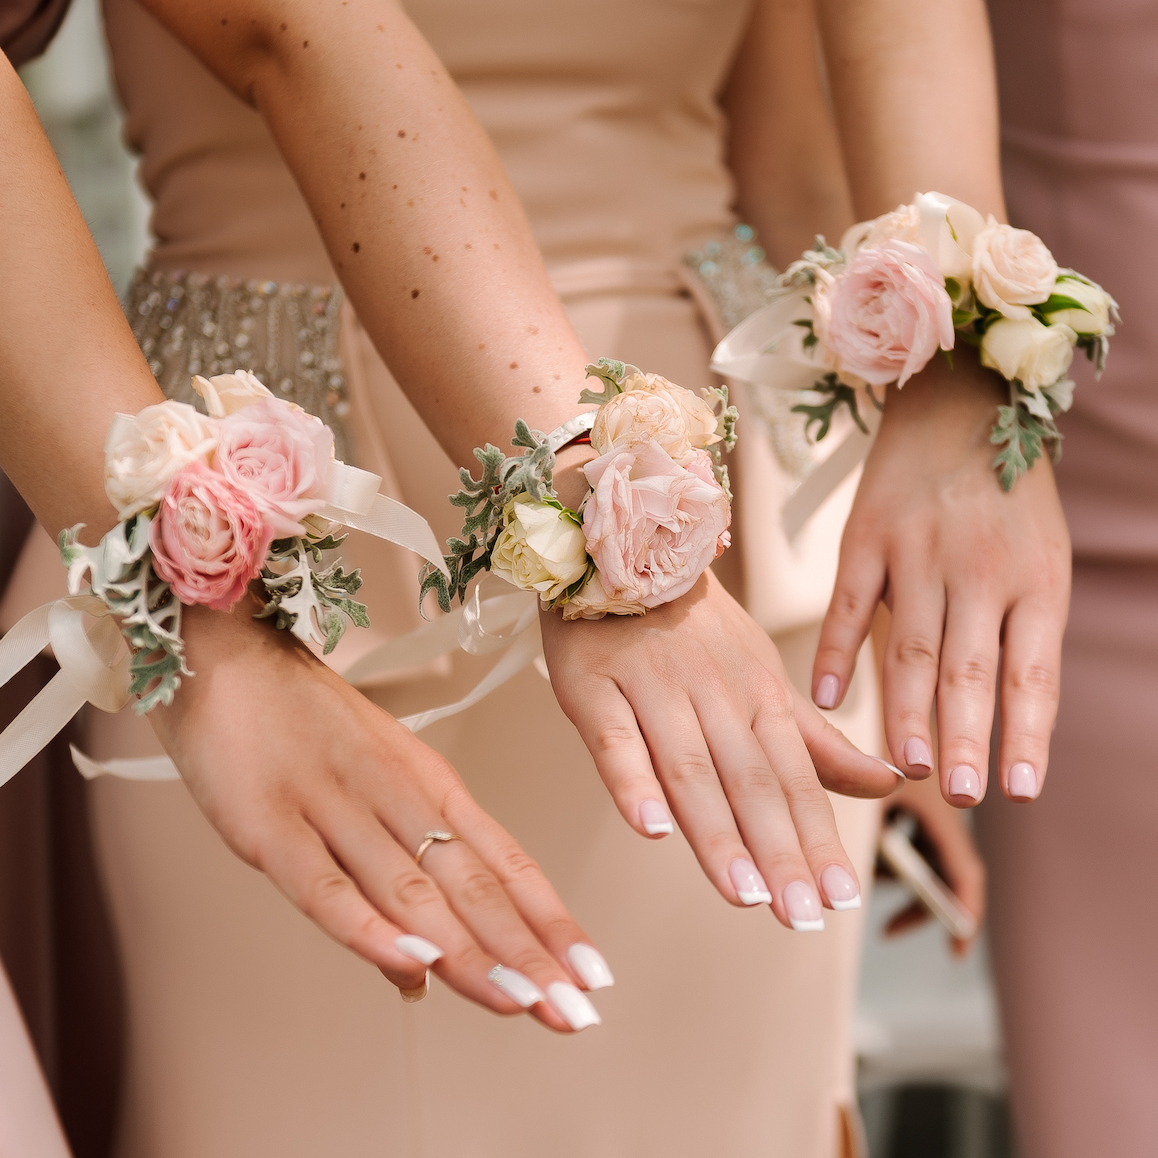 Bouquet Bridesmaid Bracelet Flowers Stock Photo 418860481 | Shutterstock